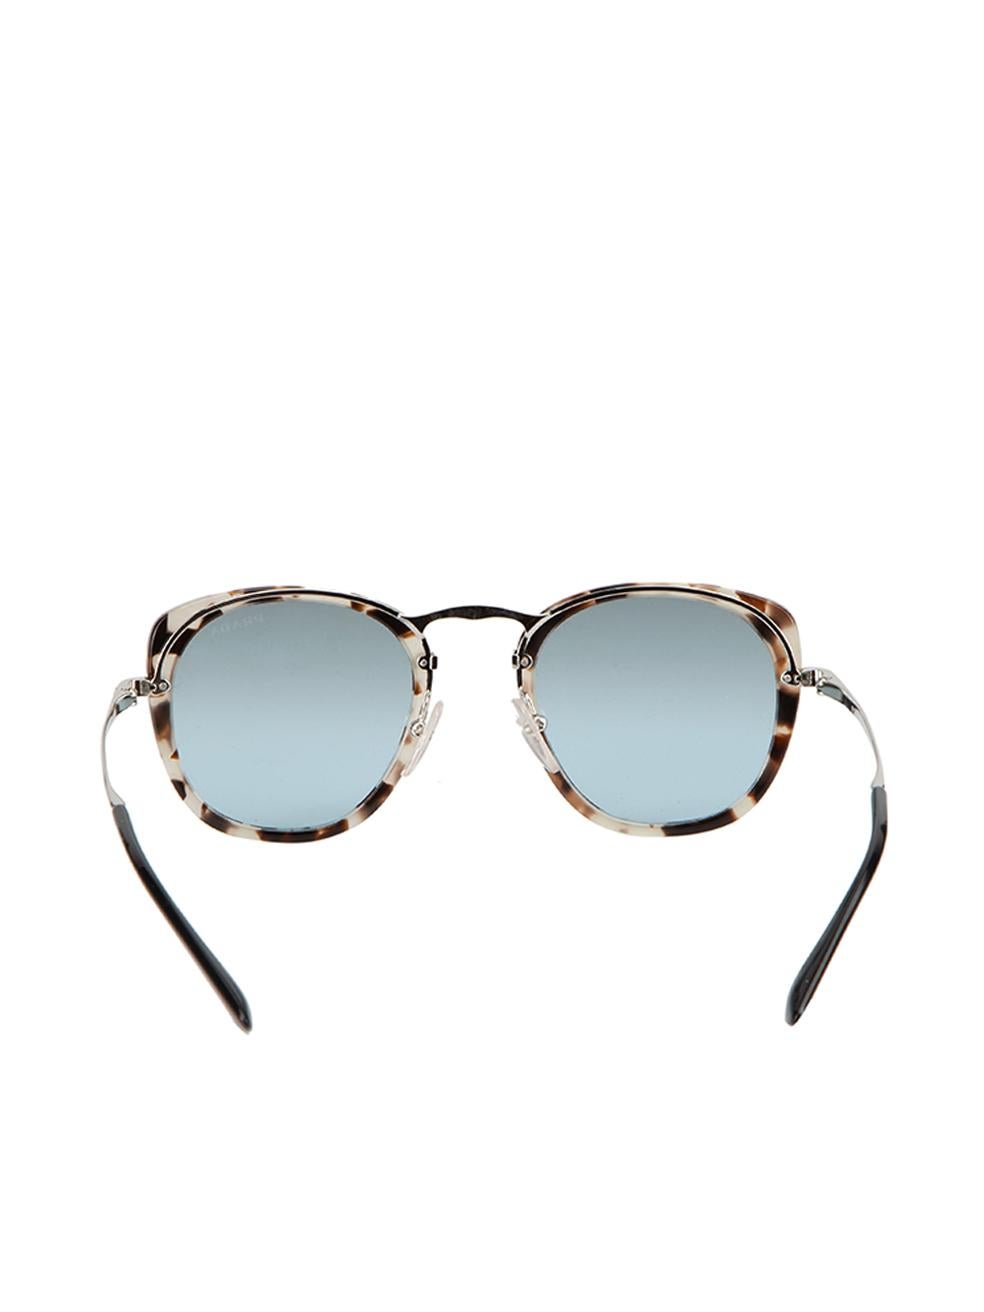 Prada Women's Grey & Brown Tortoiseshell Round Sunglasses In Good Condition In London, GB